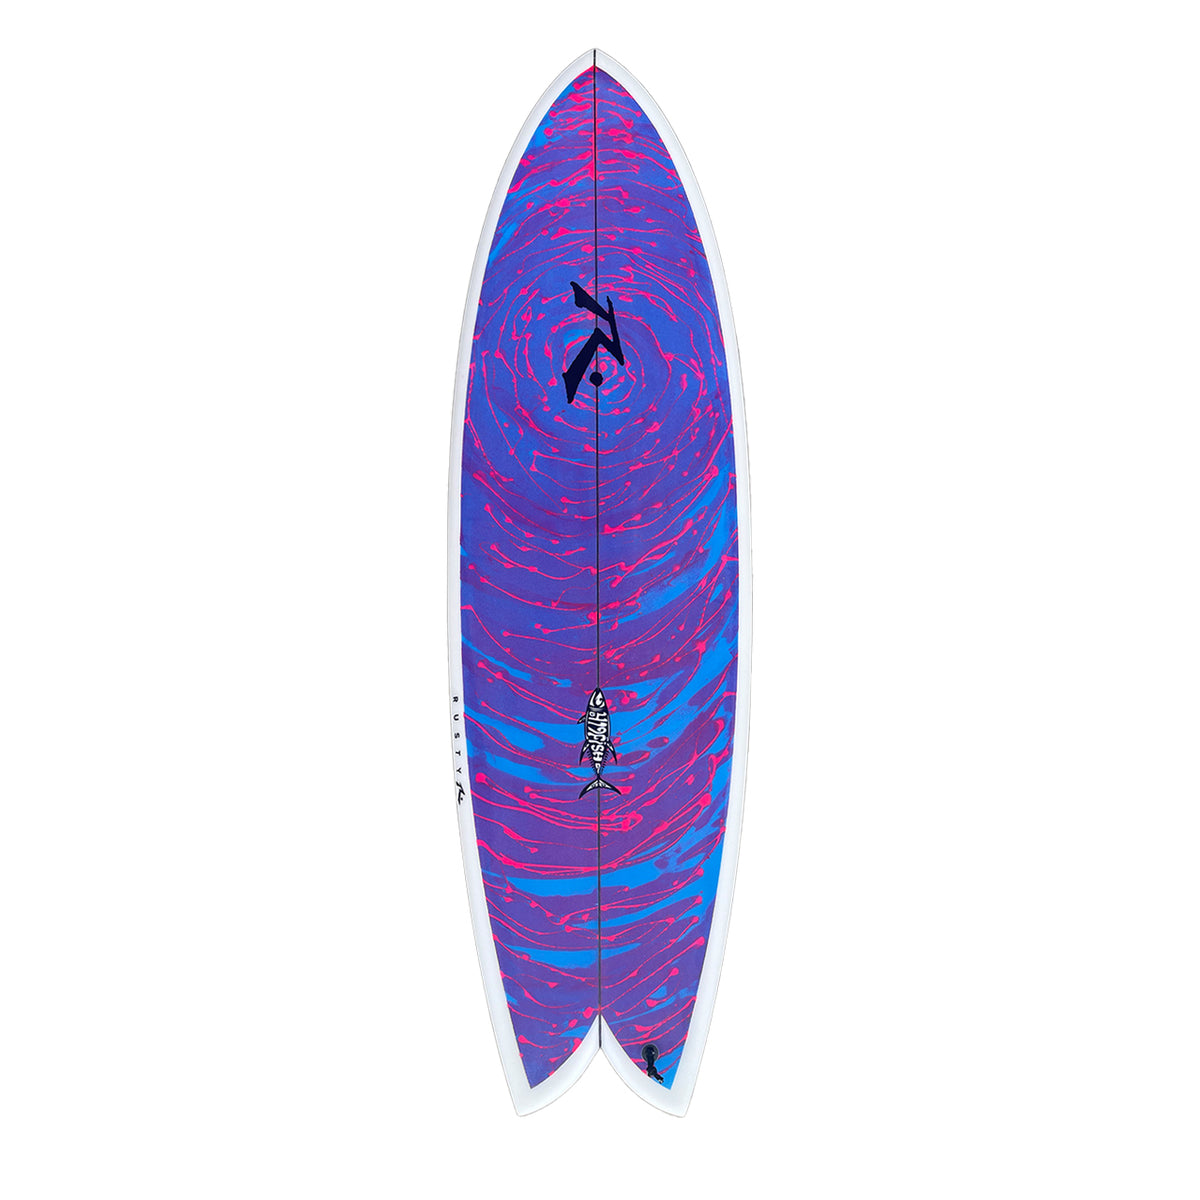 419fish - Alternative - Rusty Surfboards - Top View - Blue Pink Swirl